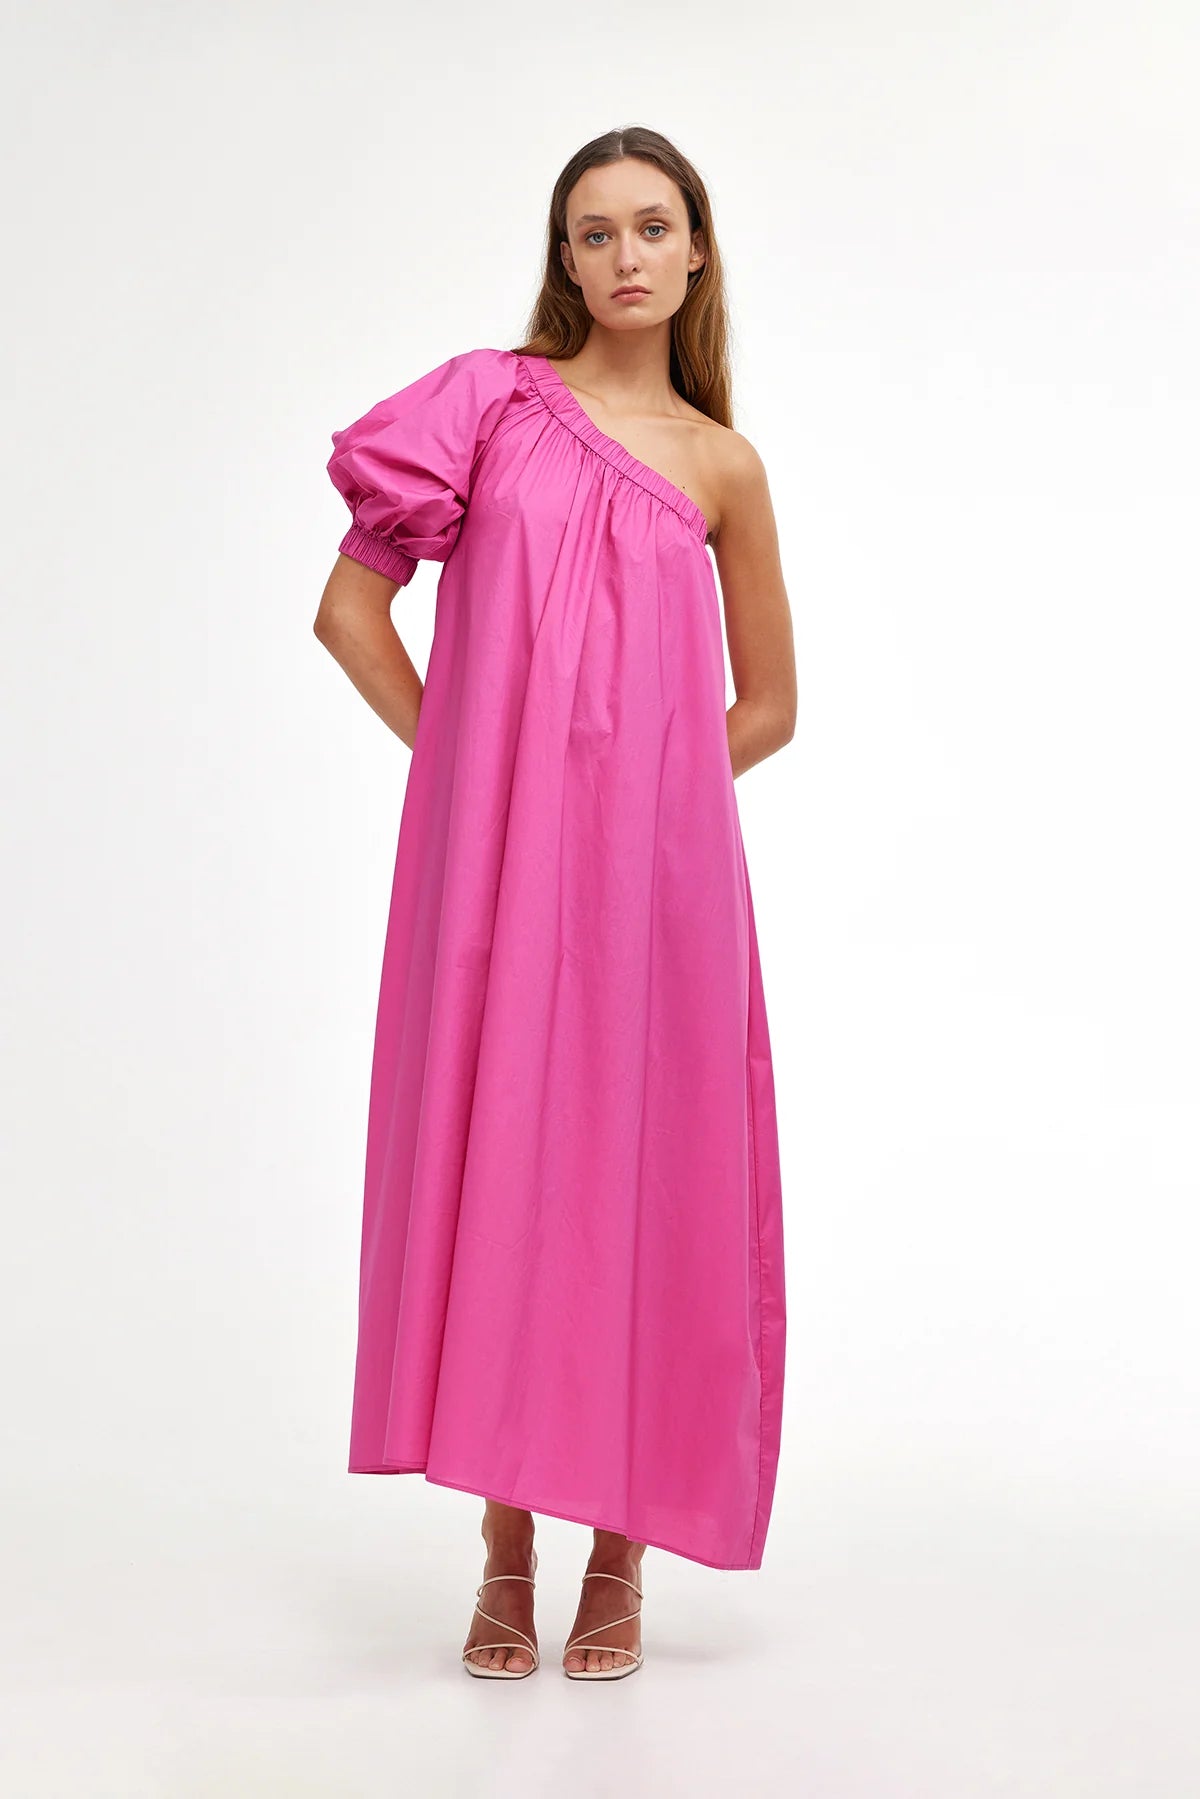 Kinney - Poppy Dress - Primrose